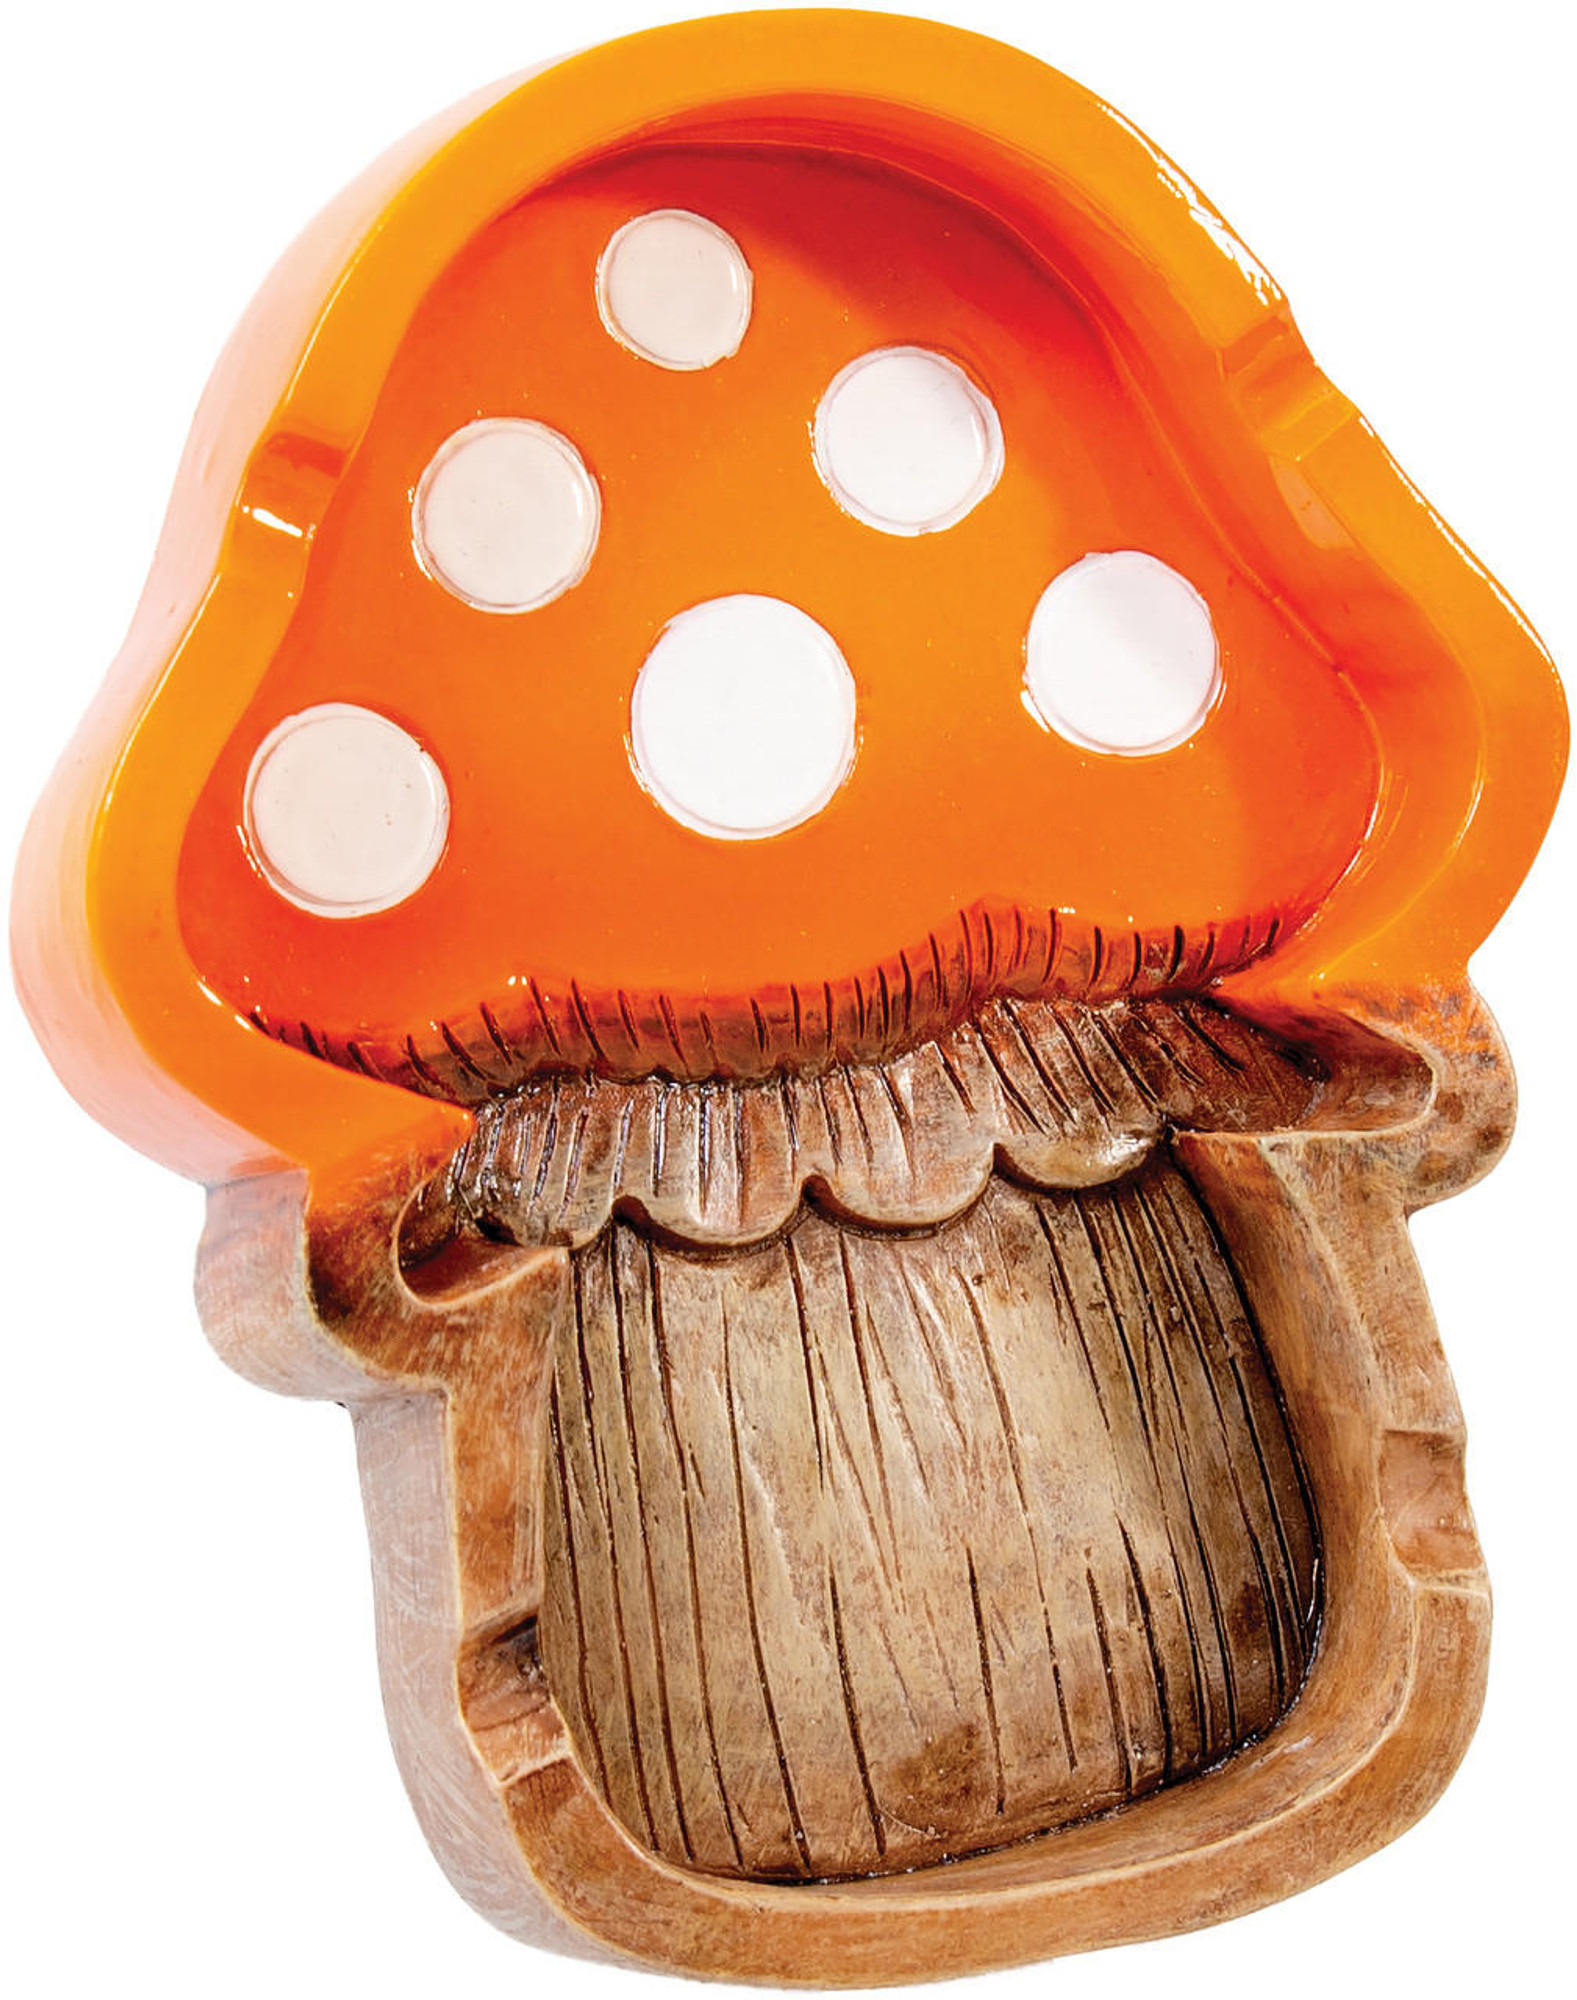 Big Mushroom Tree Polystone Cigarette Ashtray with Storage